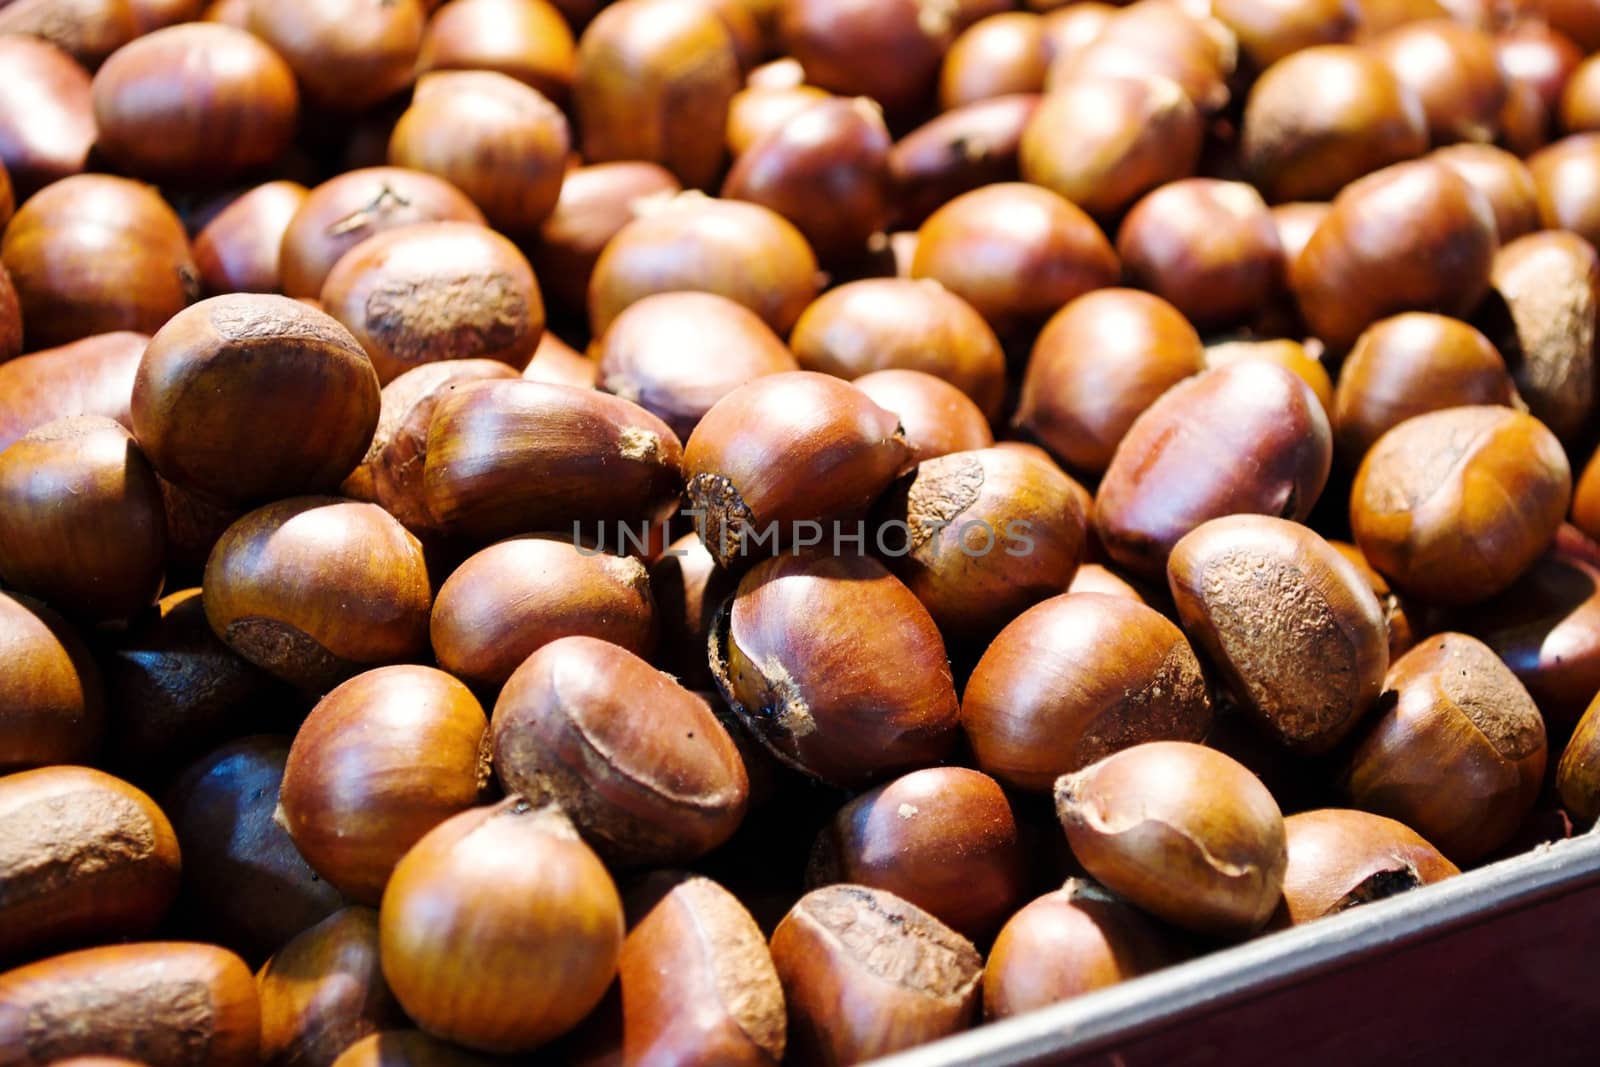 Chestnut by apichart